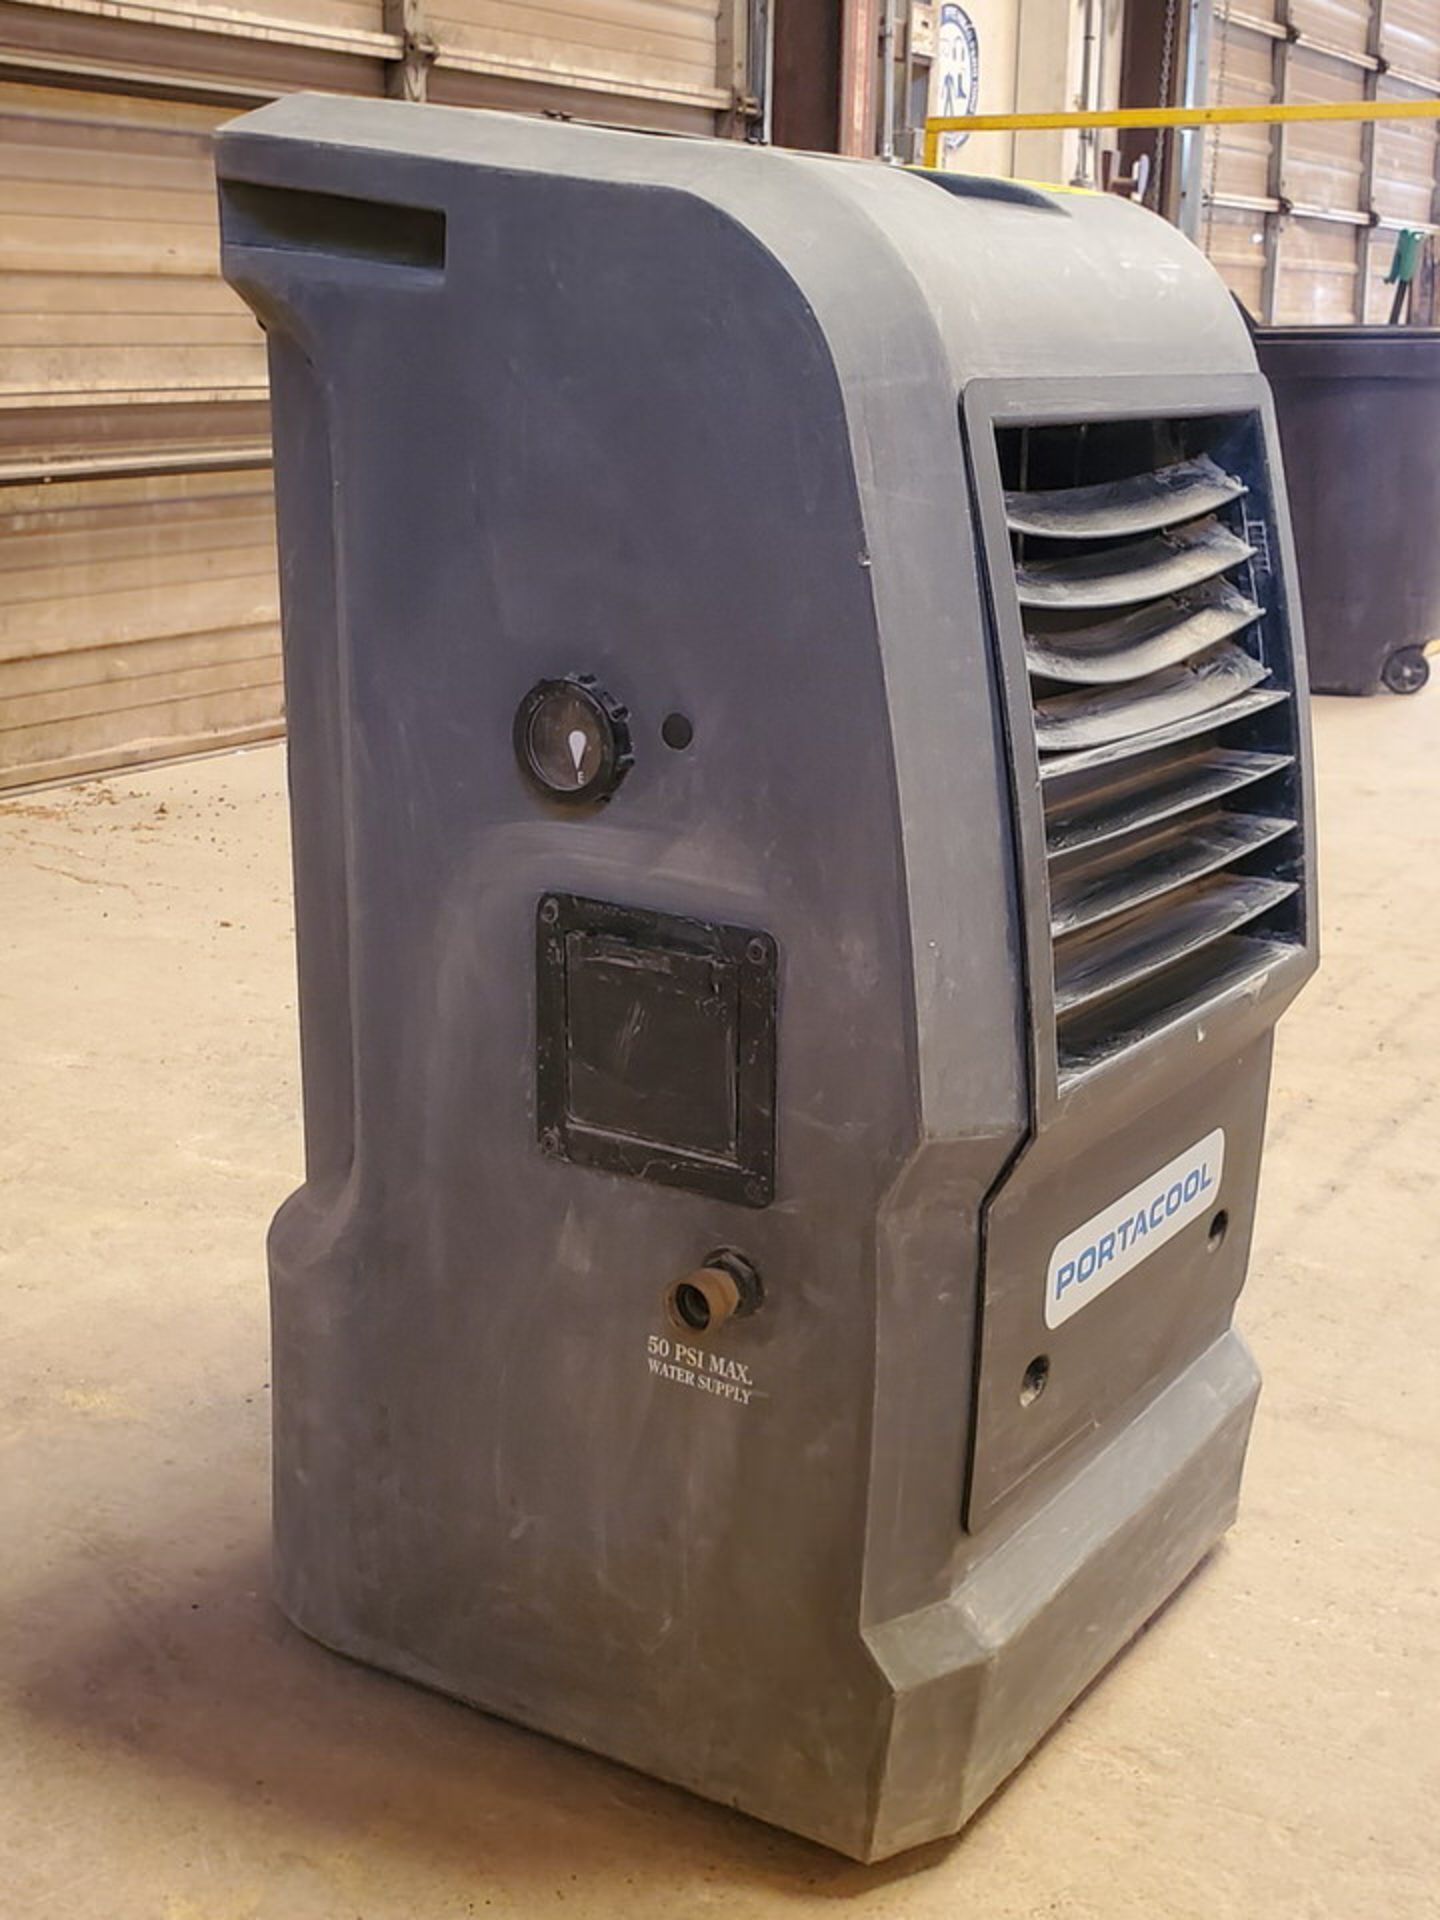 Portacool Cyclone 110 Portable Evaporative Cooler 115V, 60HZ, 2.2A, 110GA - Image 2 of 3